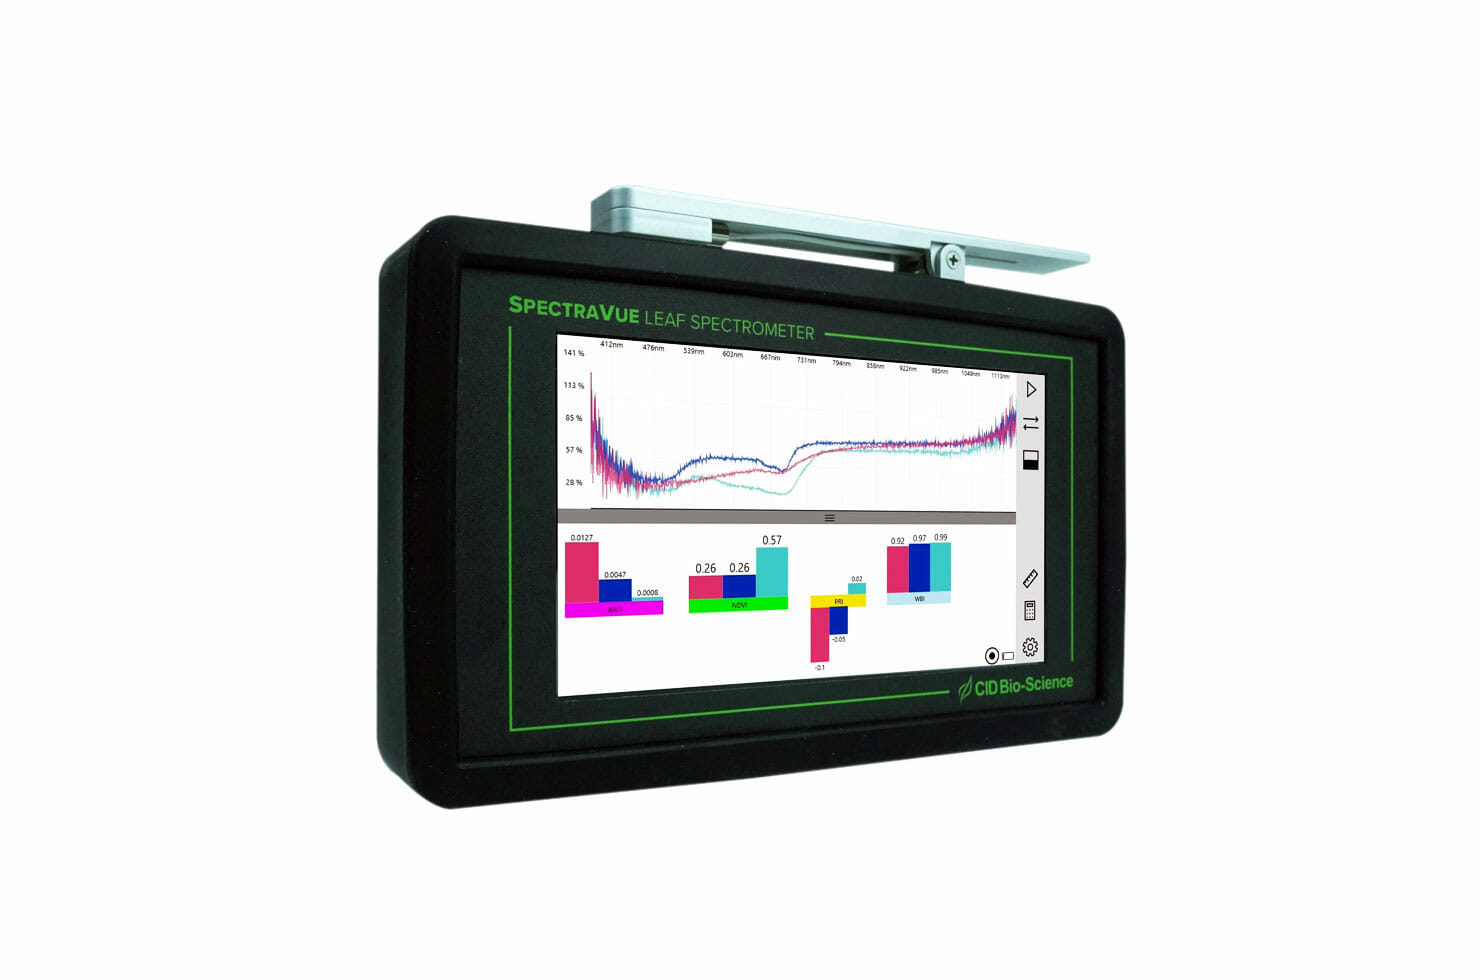 CI-710s SpectraVue Leaf Spectrometer